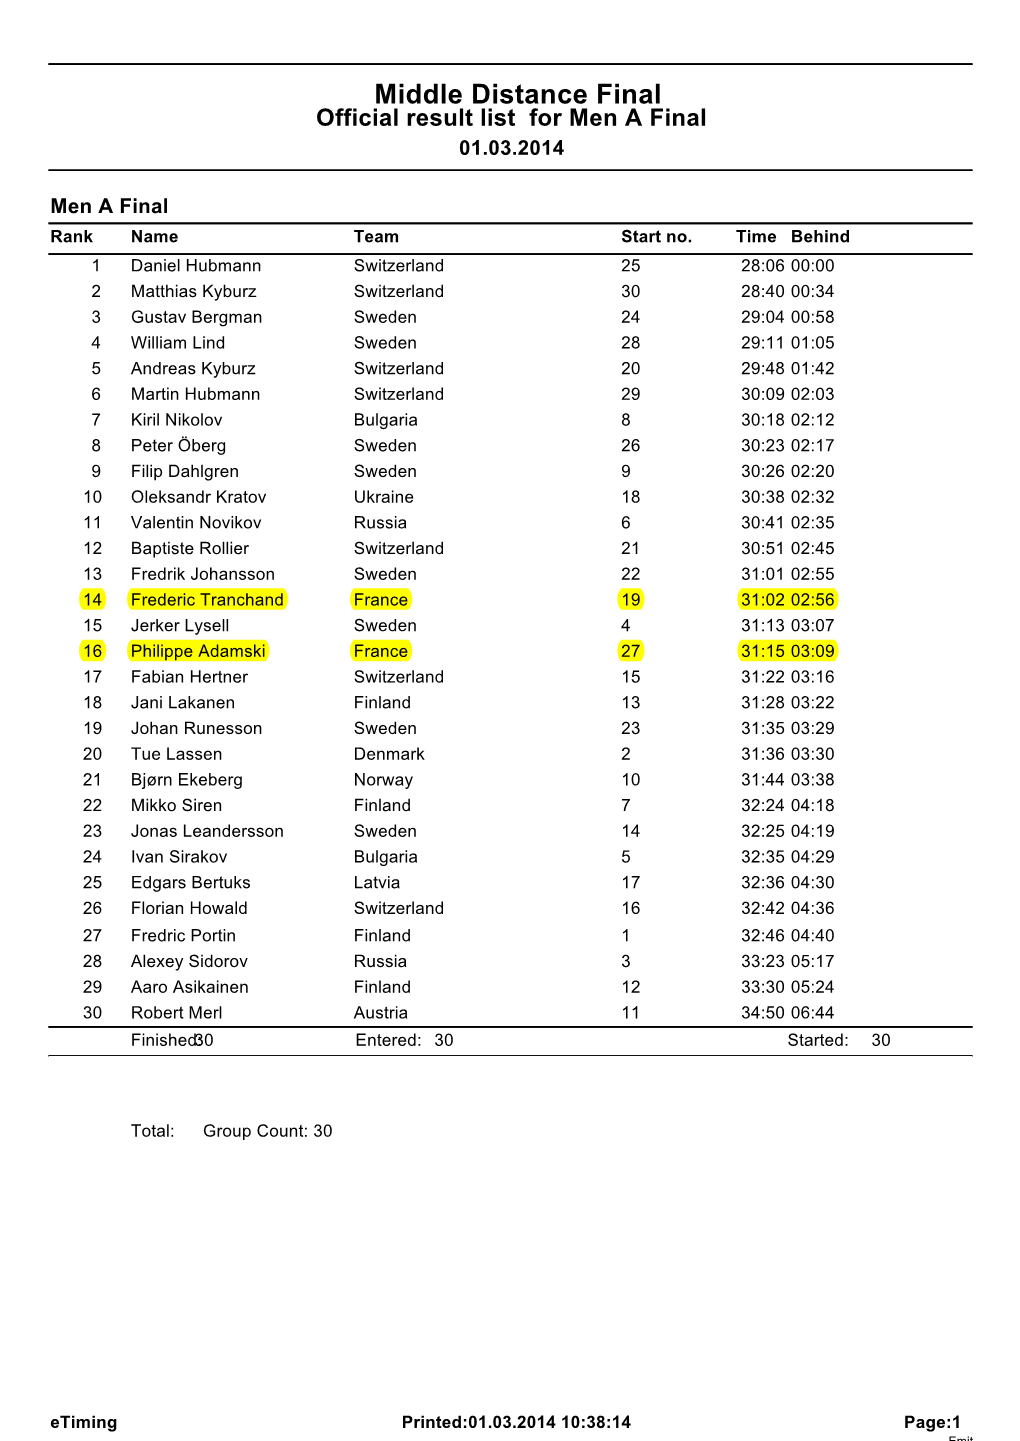 Middle Distance Final Official Result List for Men a Final 01.03.2014